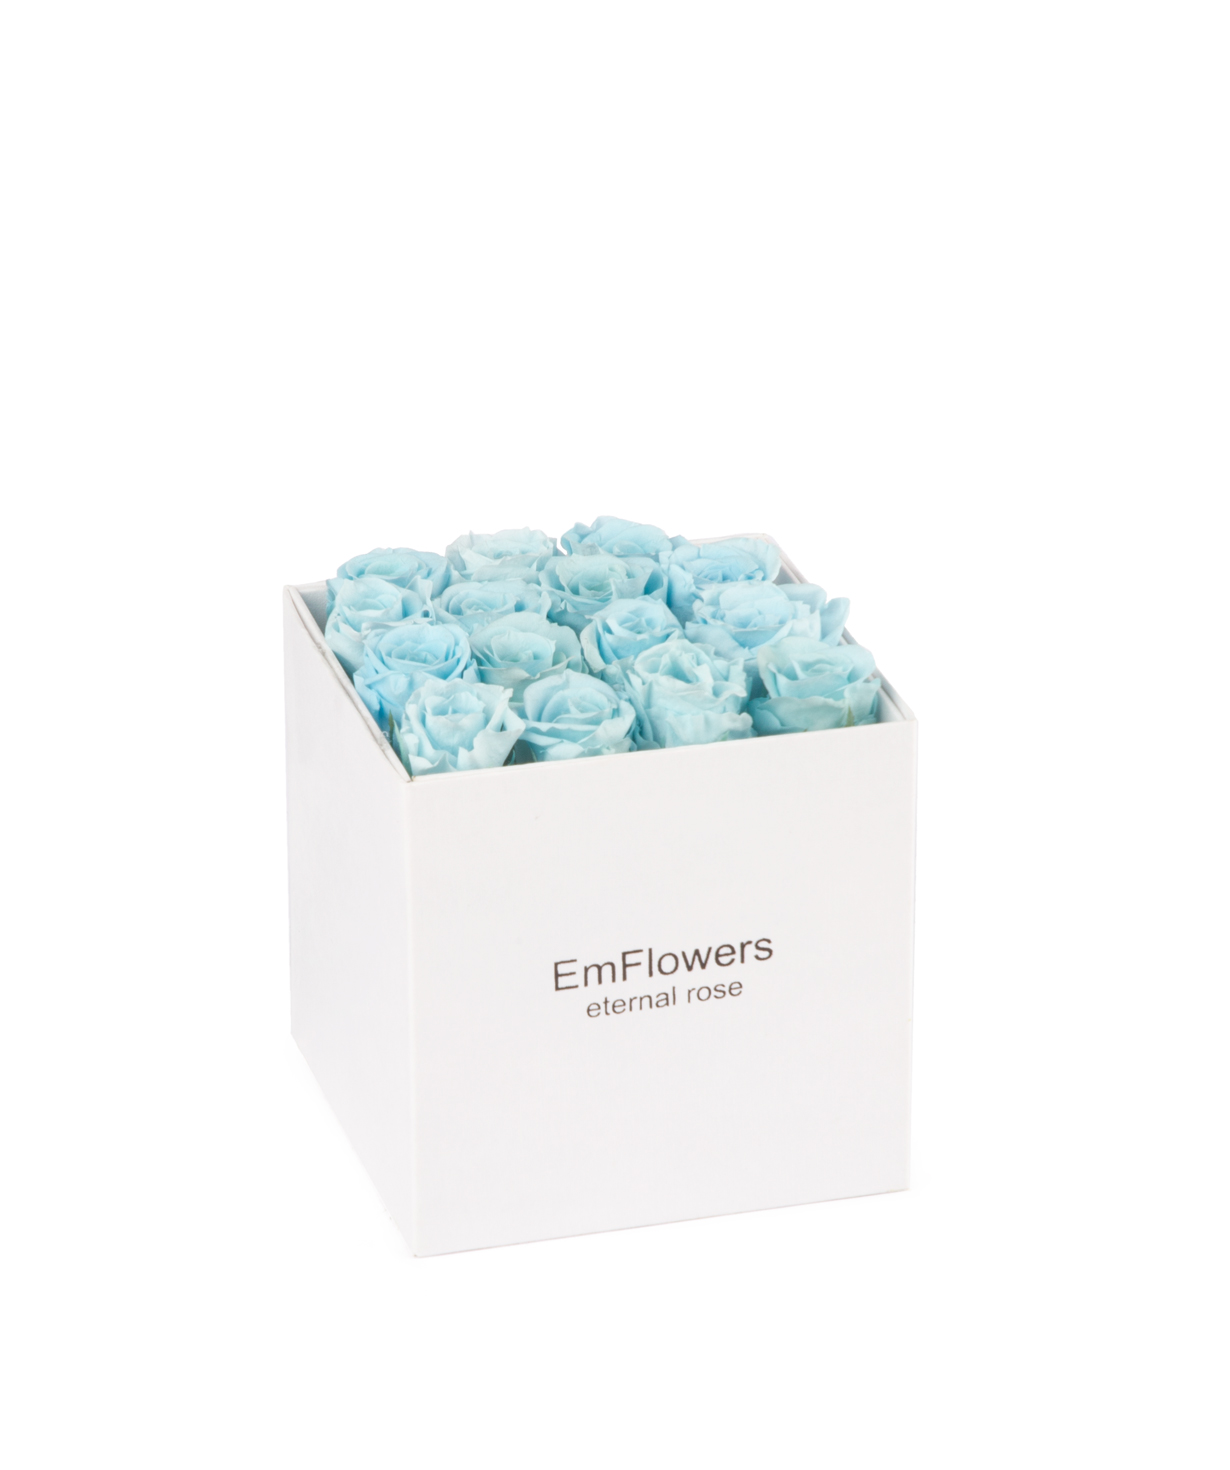 Rose `EM Flowers` eternal, in a box, blue